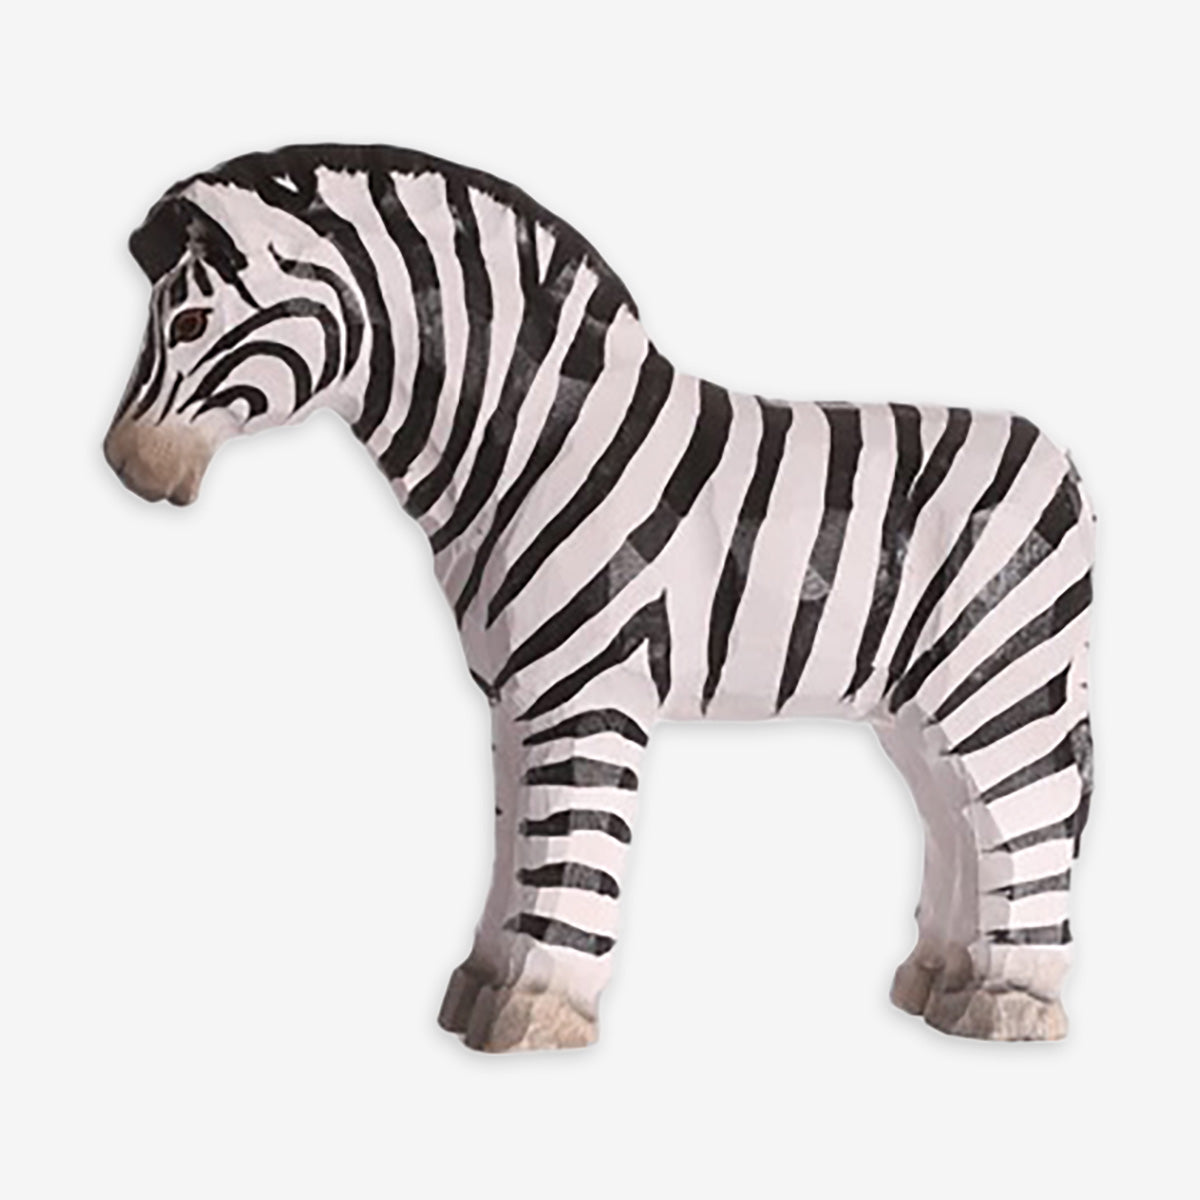 Wudimals Wooden Animal - Zebra